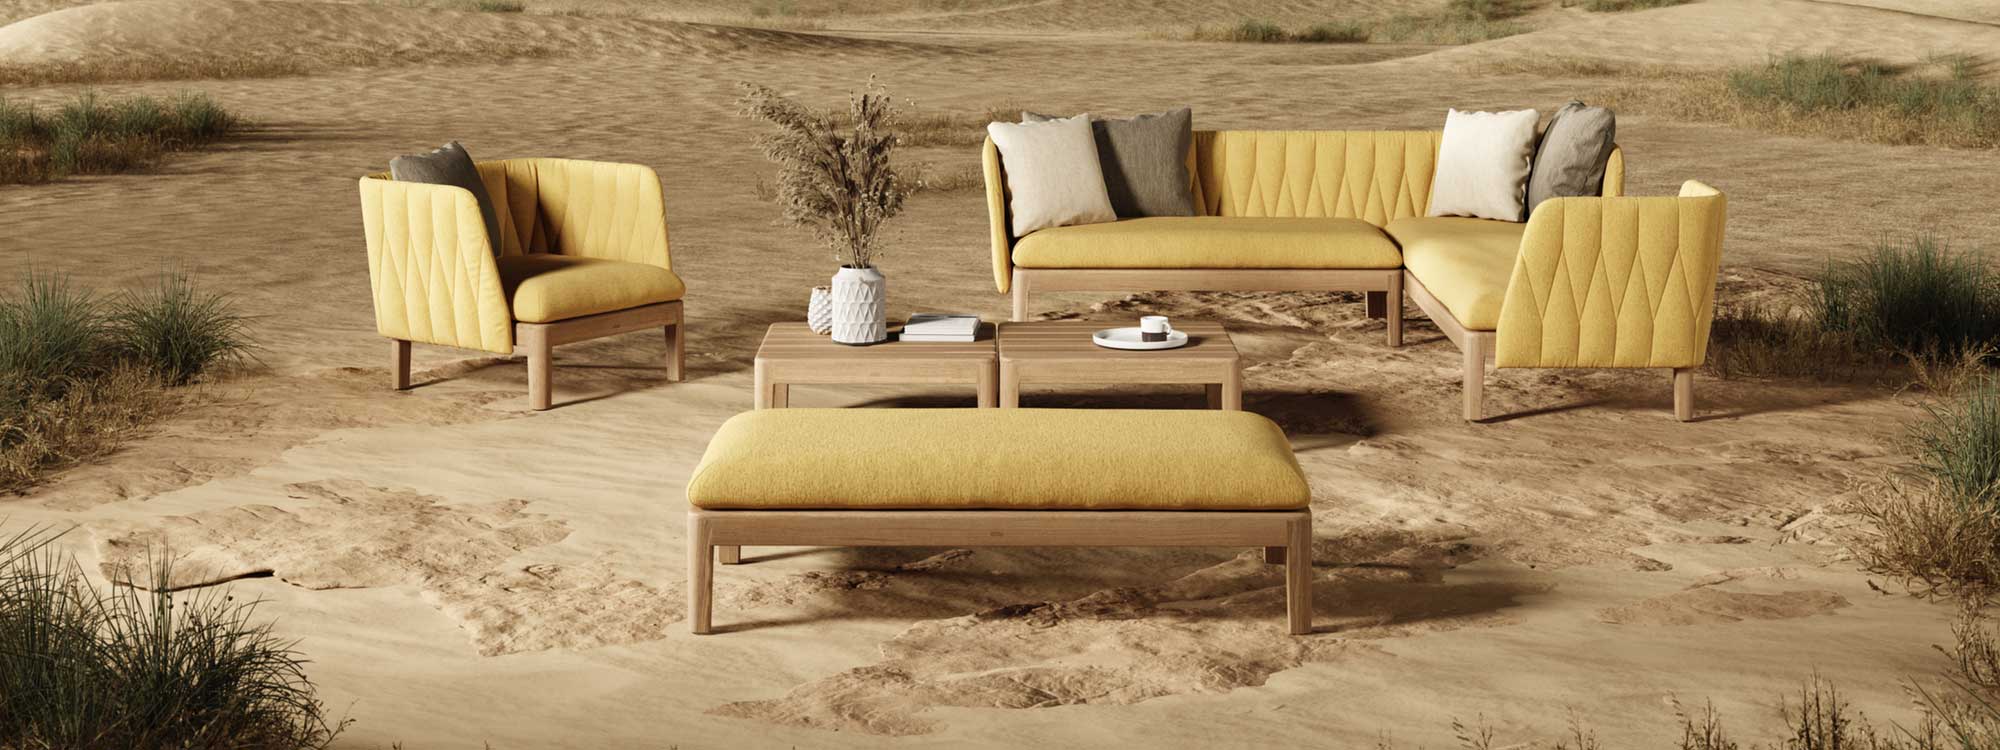 Image of Royal Botania Calypso upholstered teak corner sofa and lounge furniture in sunny sand dunes